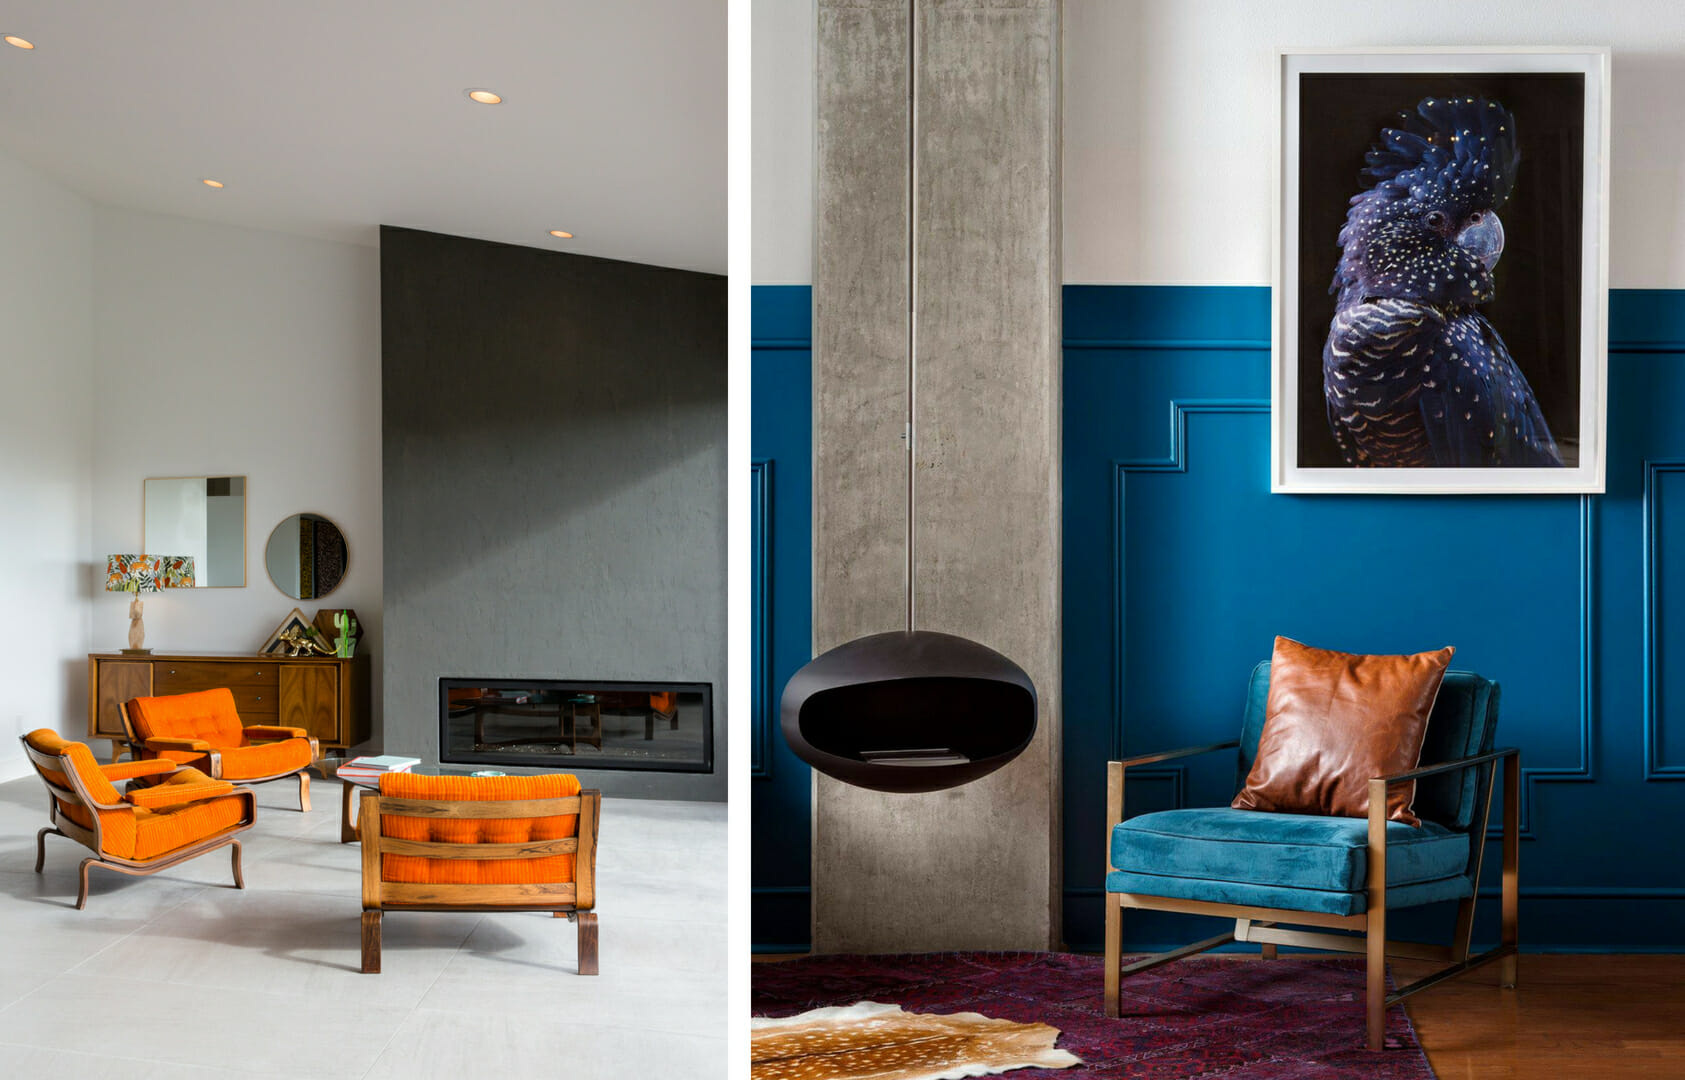 Pops of color in minimalist spaces by Decorilla designers Sara S. & Corine M.